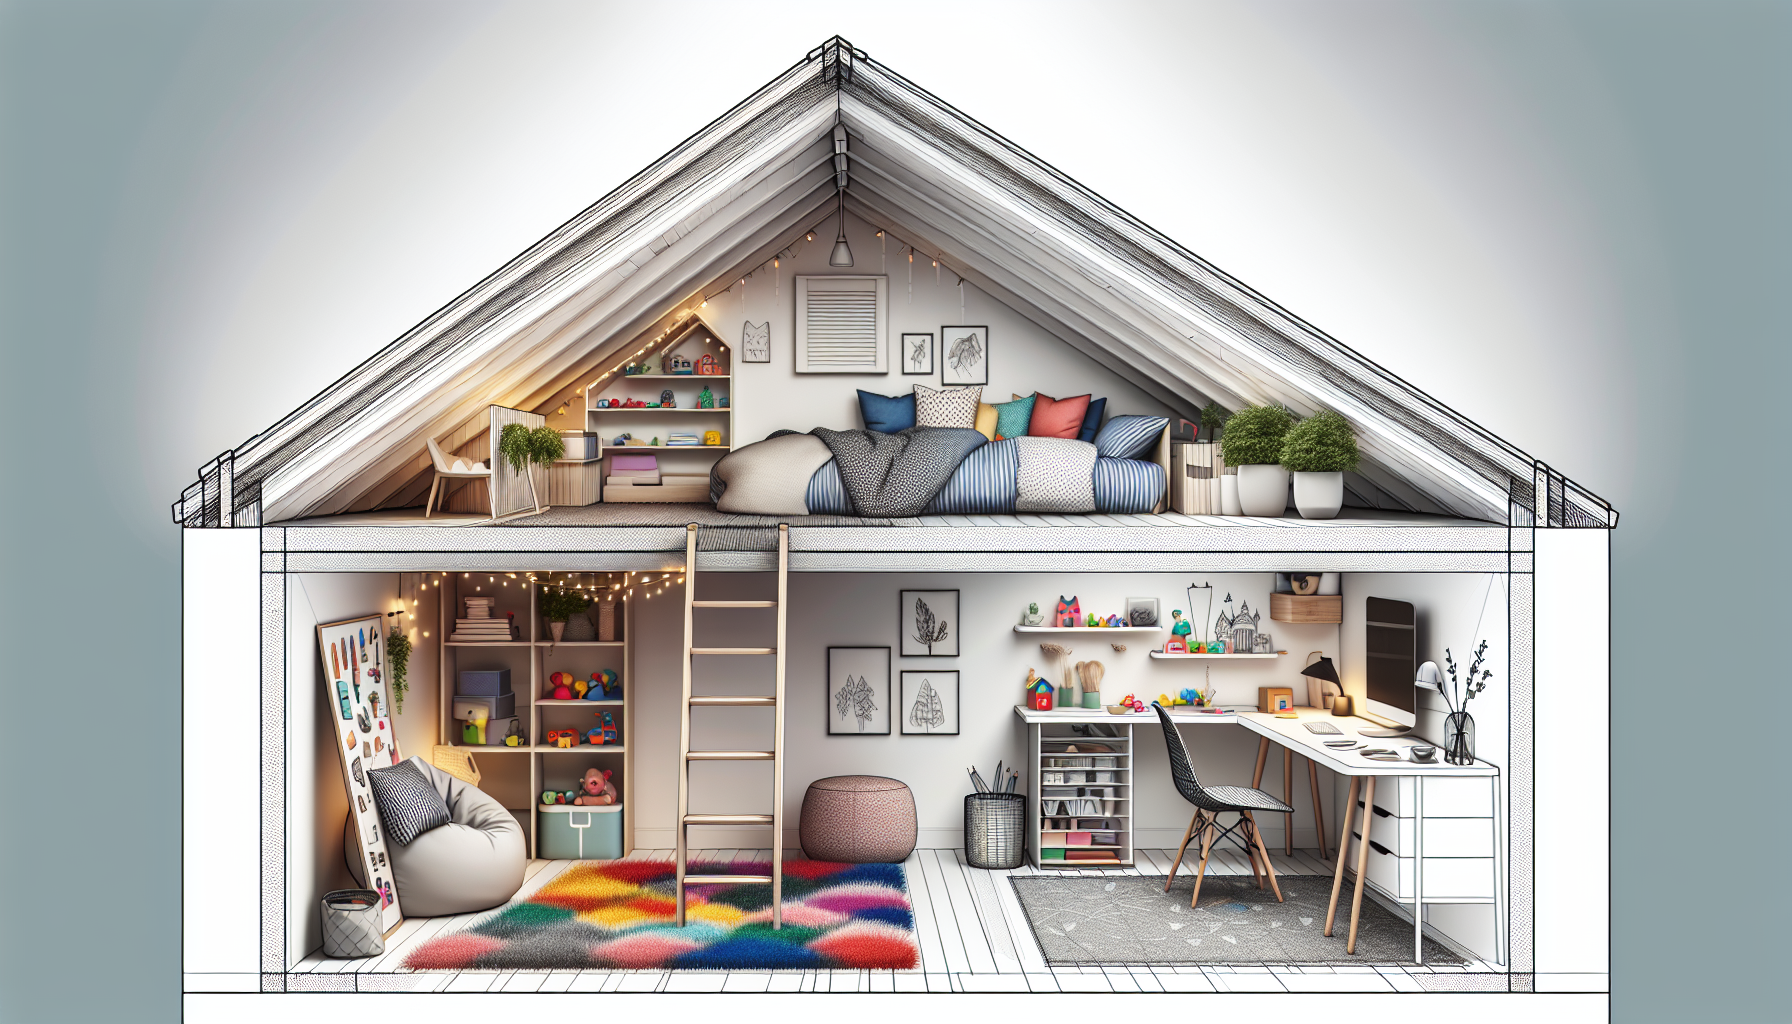 Kreative Umgestaltung des Dachgeschosses mit vielfältigen Wohnraumideen